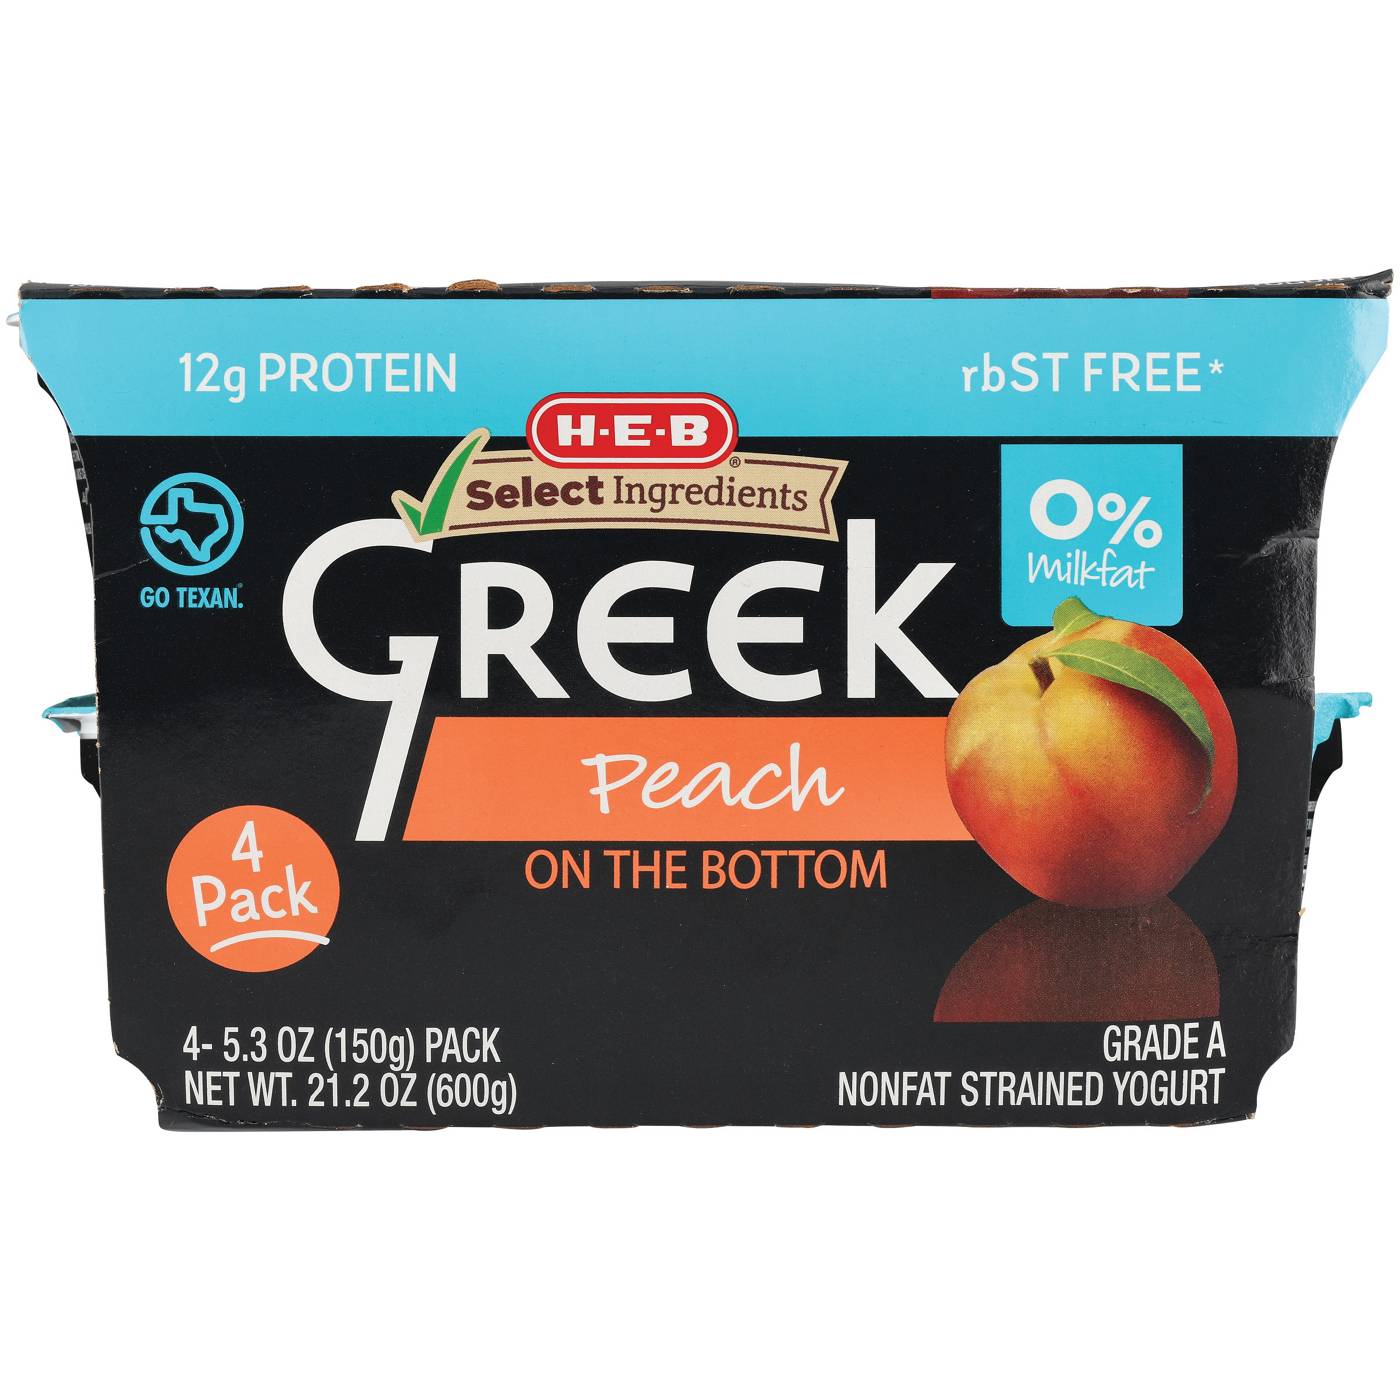 H-E-B 12g Protein Nonfat Greek Yogurt - Peach on the Bottom; image 1 of 2